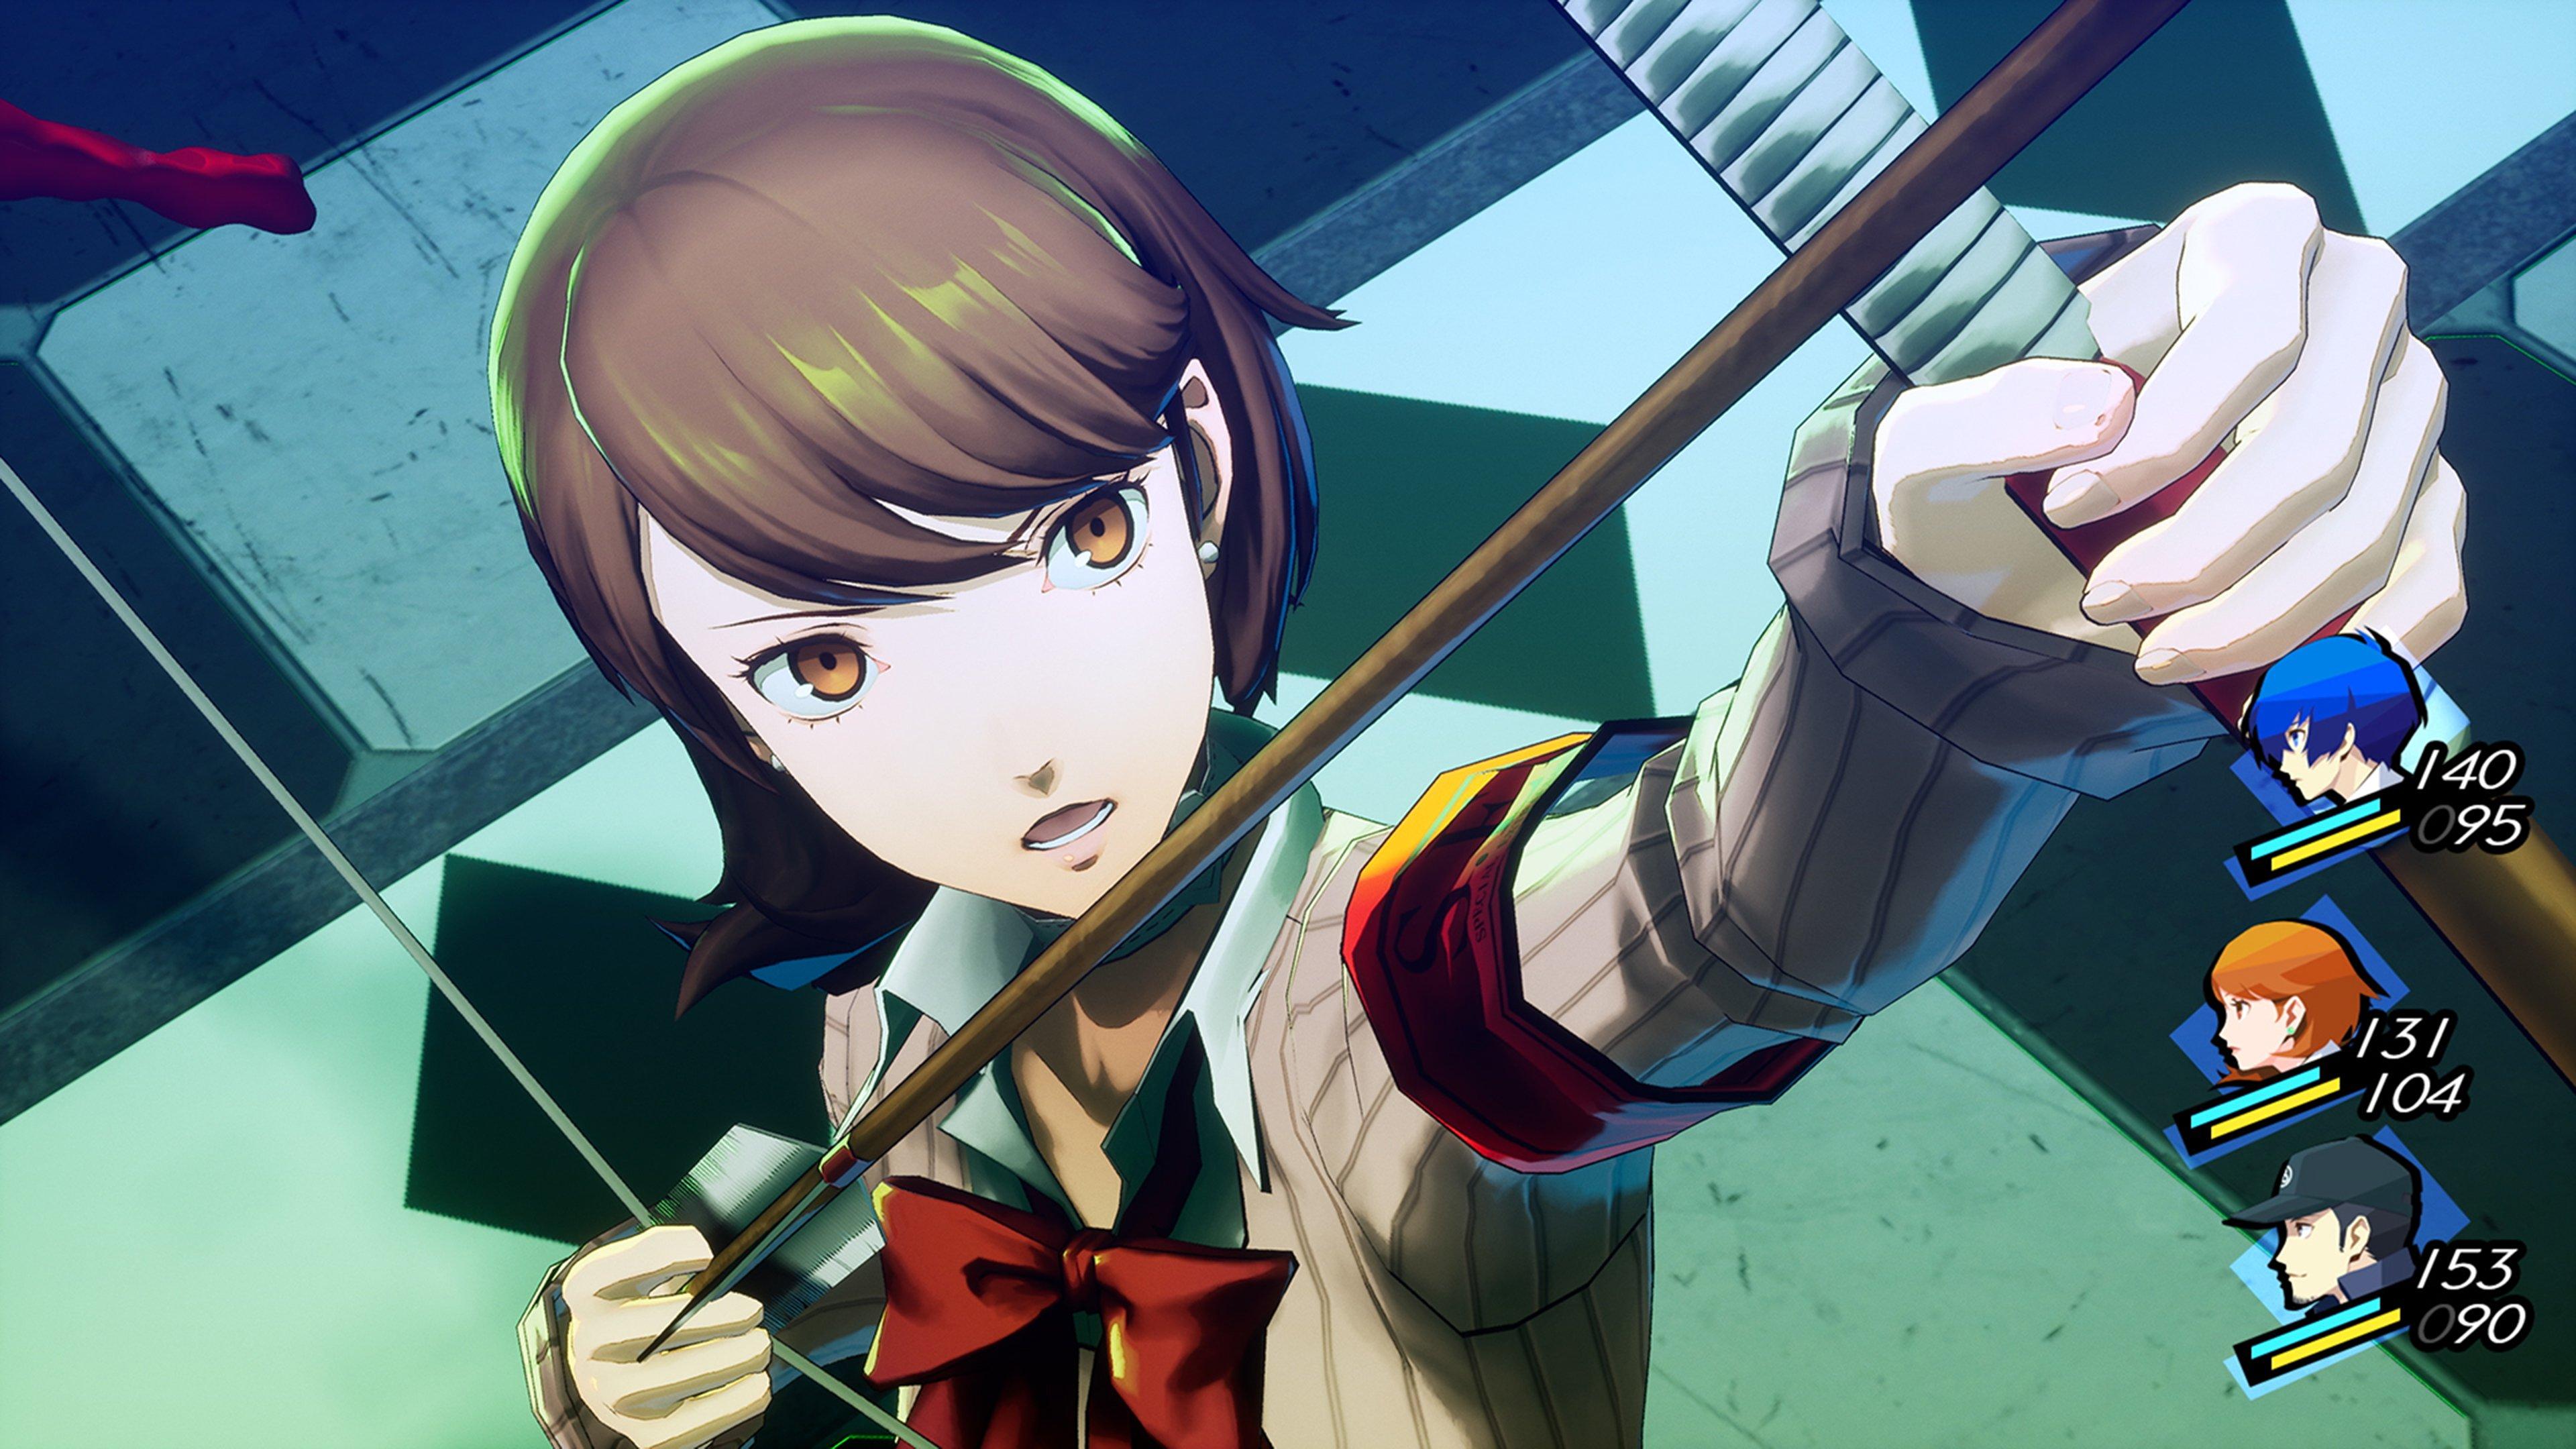 Persona 5 Royal Gameplay: Kasumi In Action - GameSpot